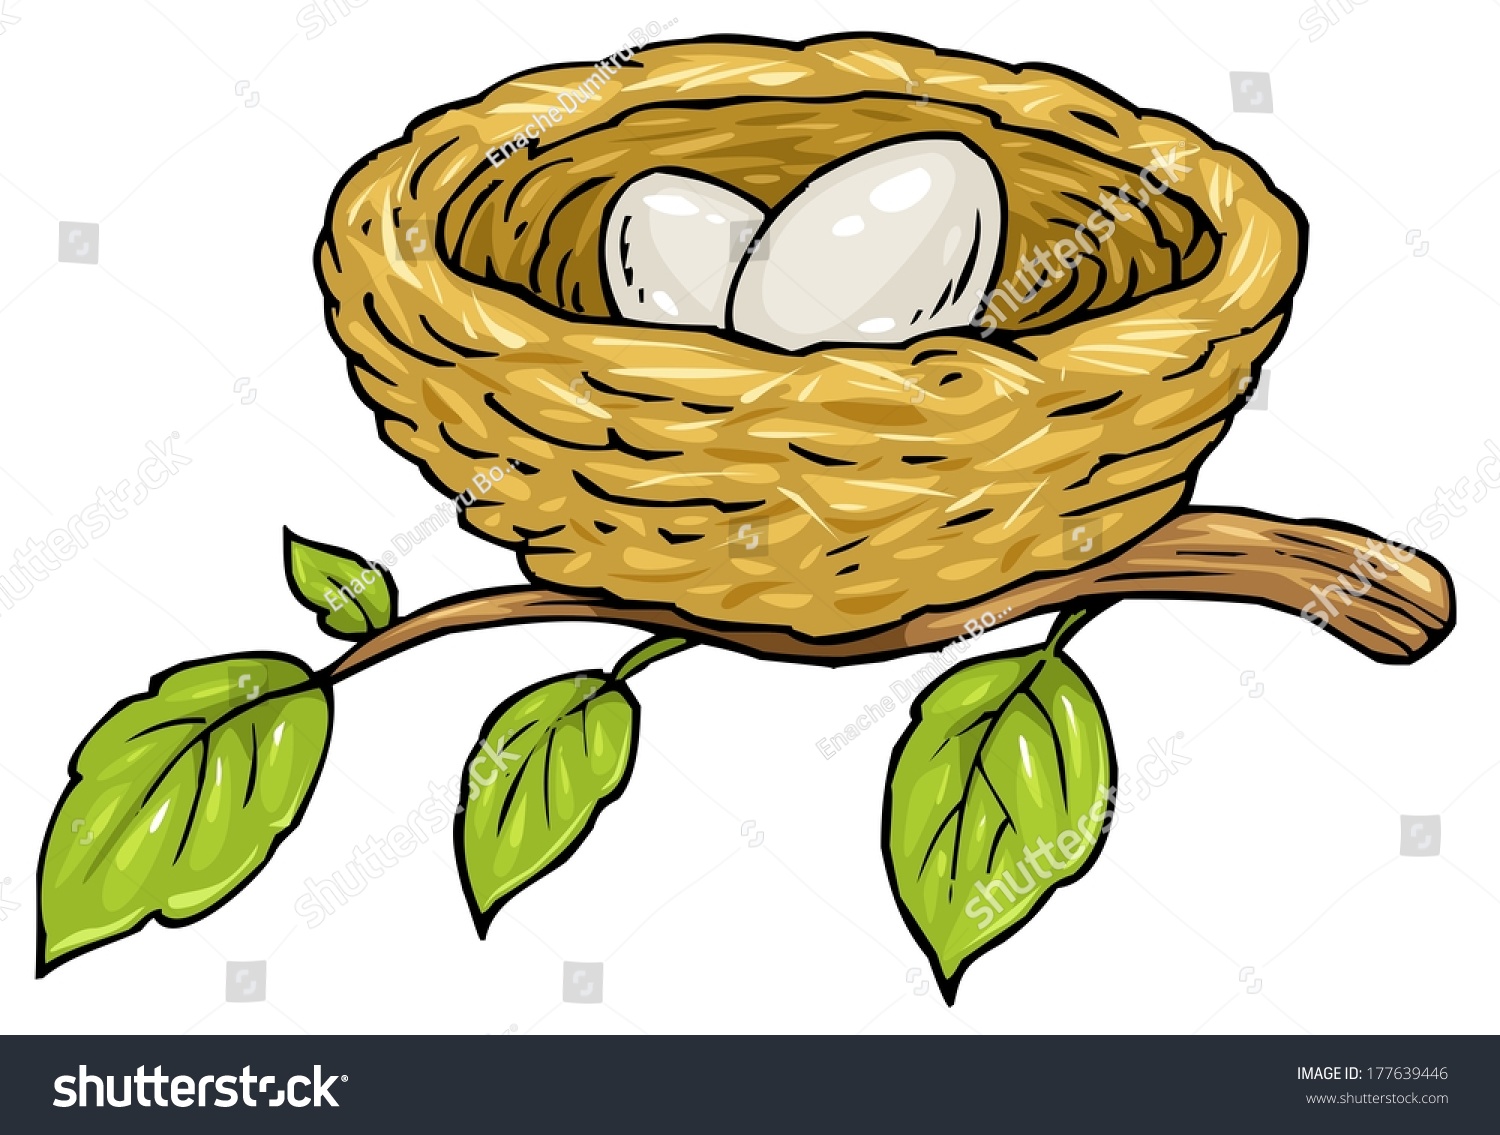 clipart nest egg - photo #44